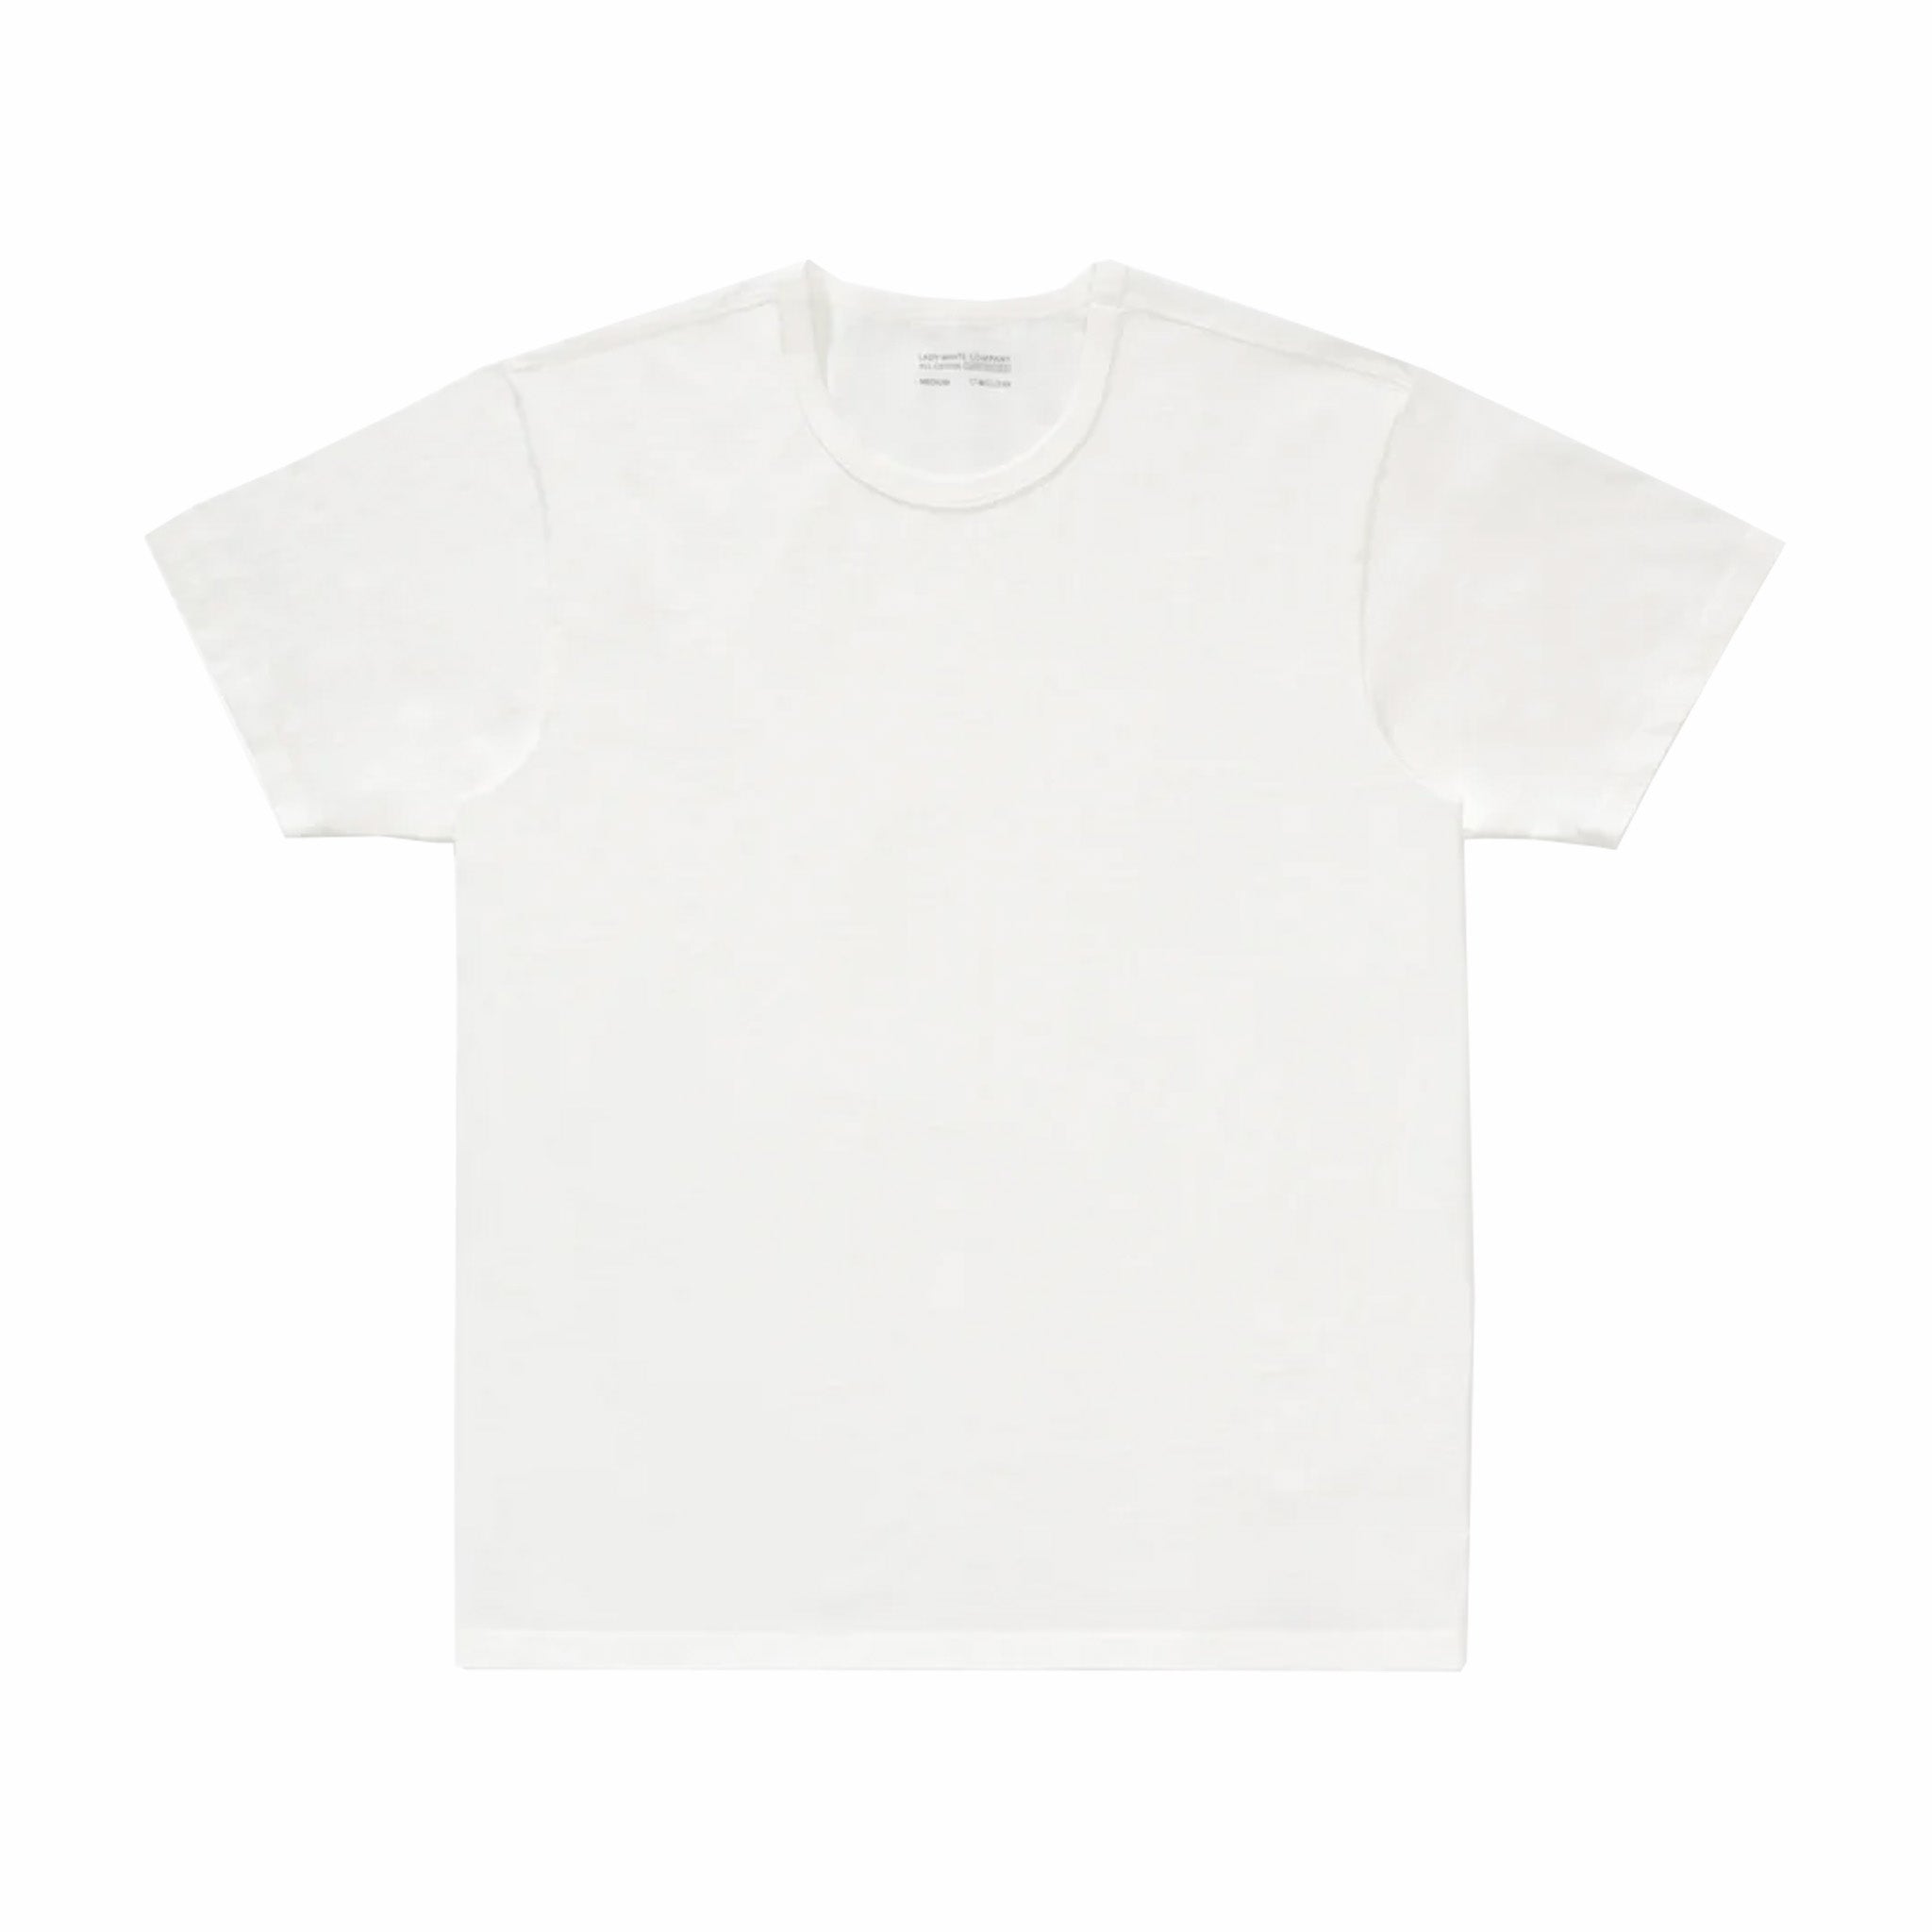 Lady White Co. Tubular T-Shirt 2-Pack (White) - August Shop